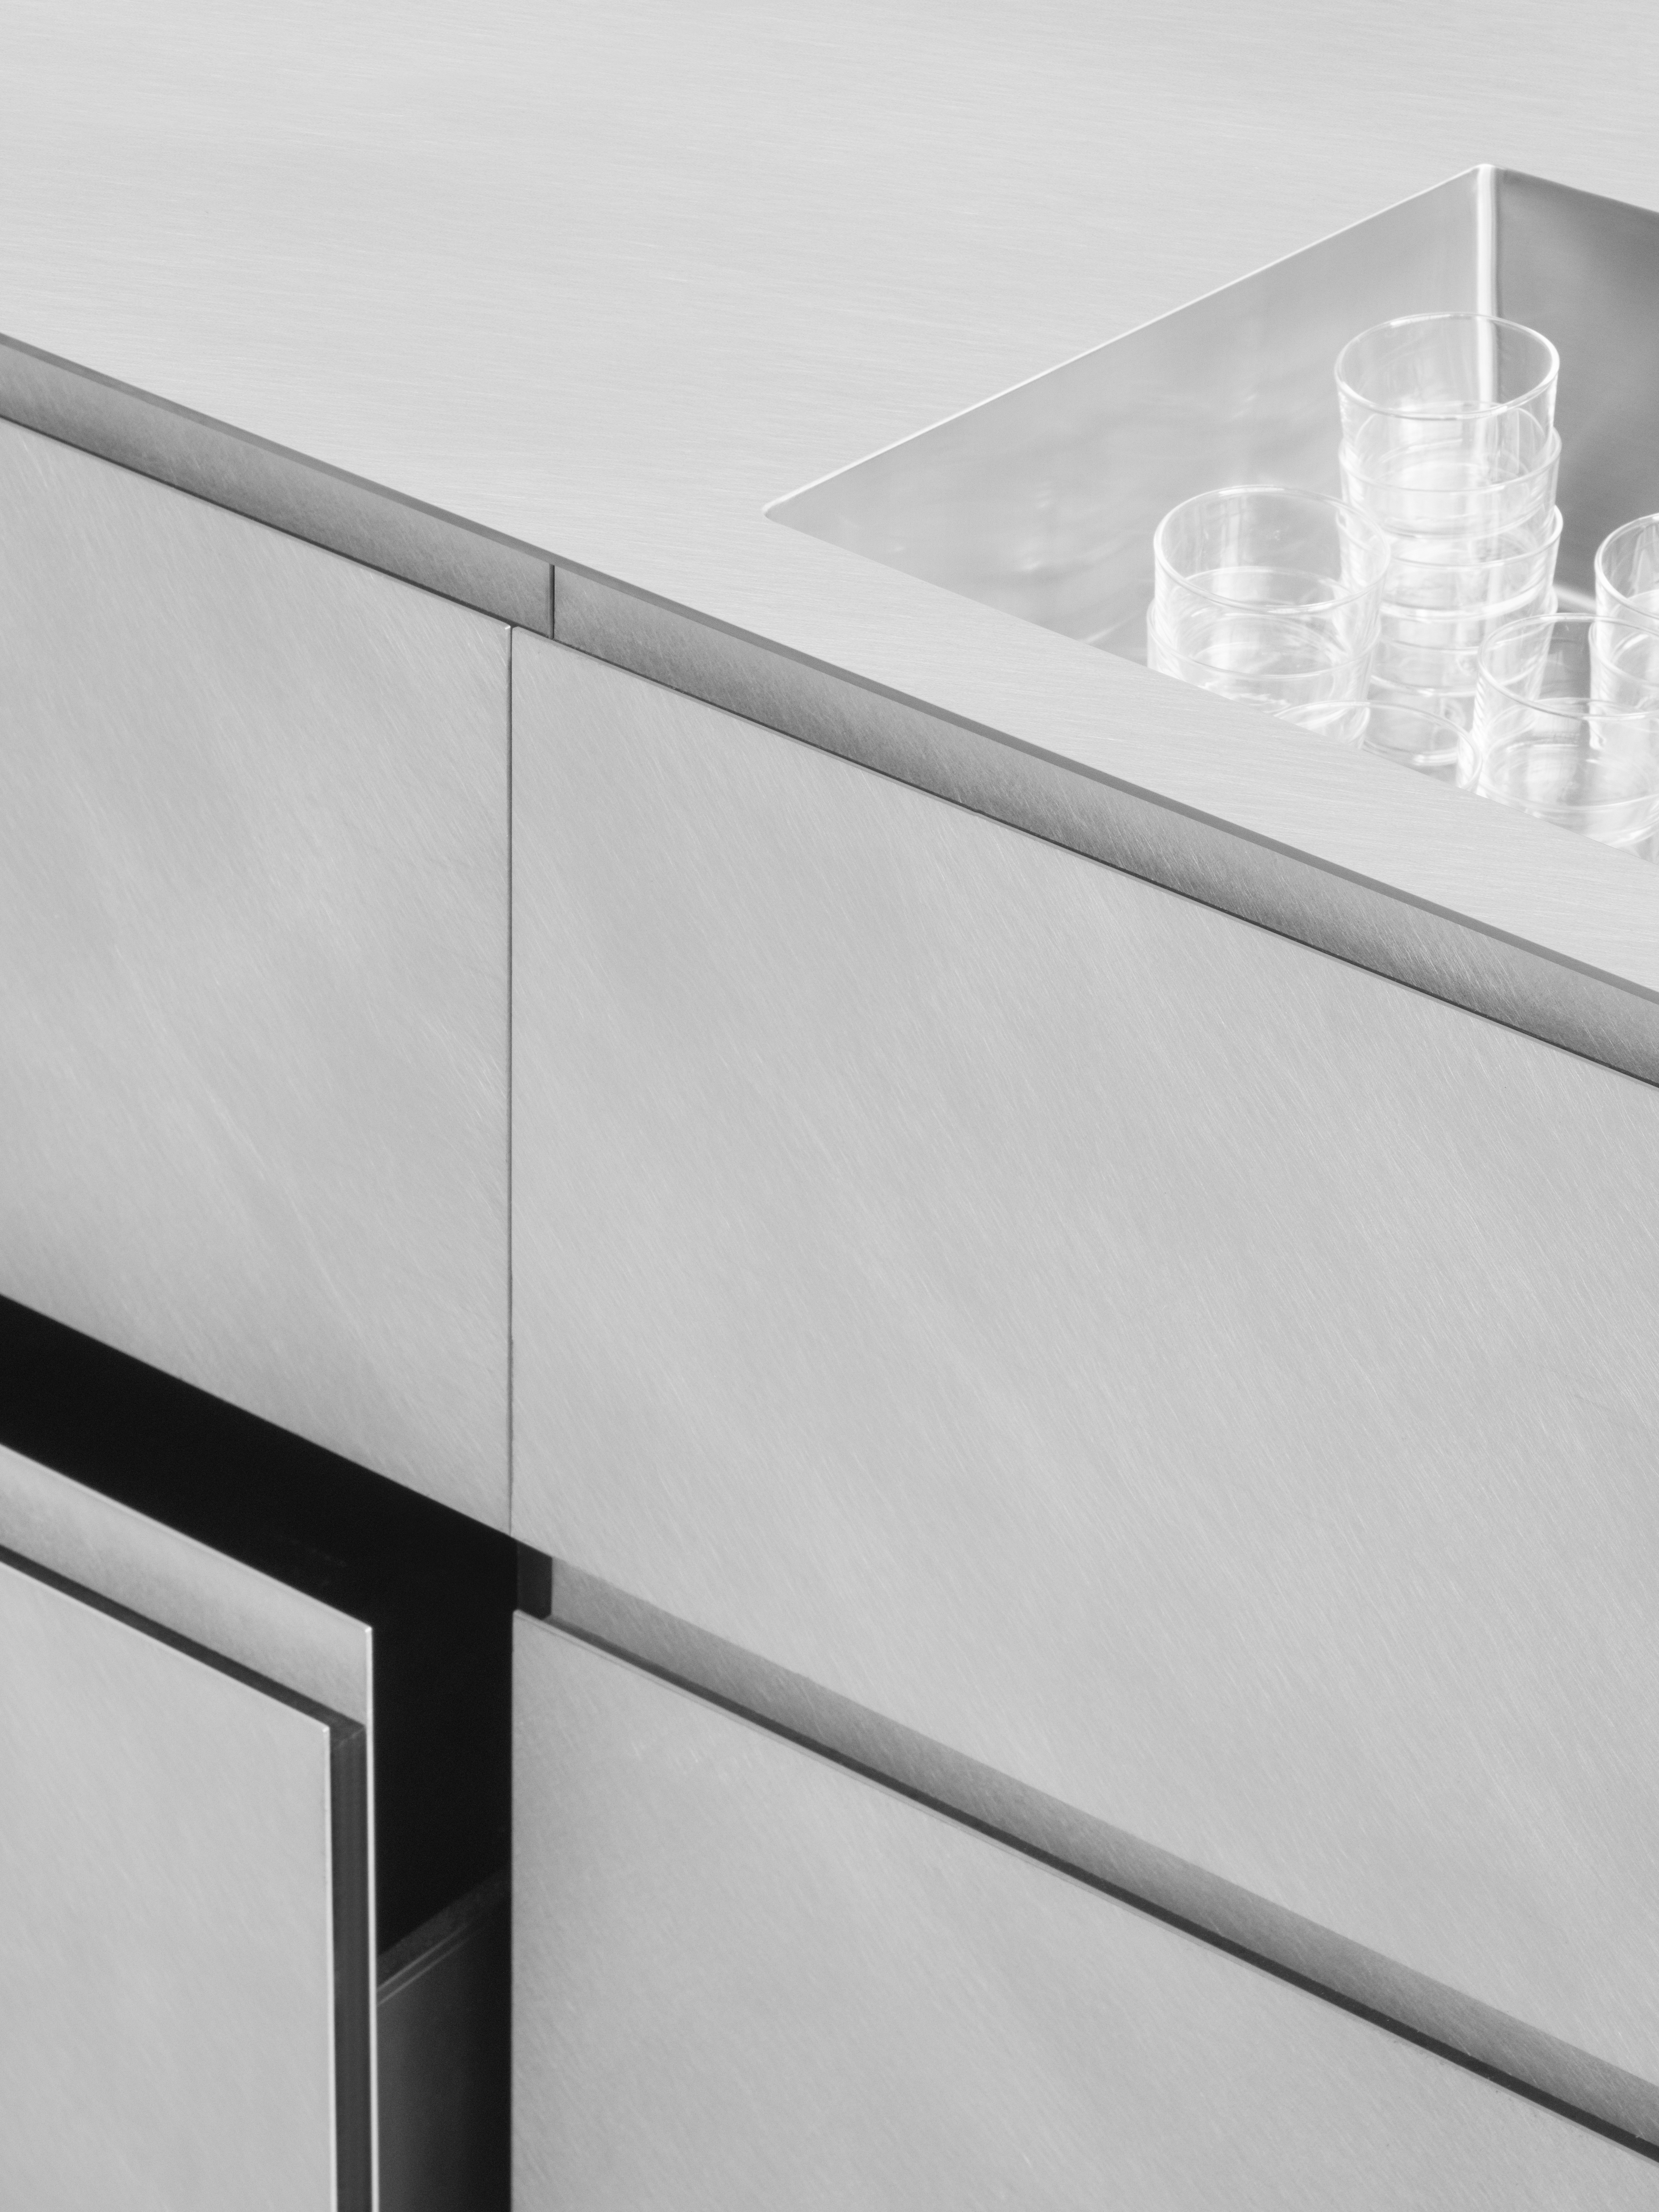 Reform metal kitchen cabinets by Studio David Thulstrup.